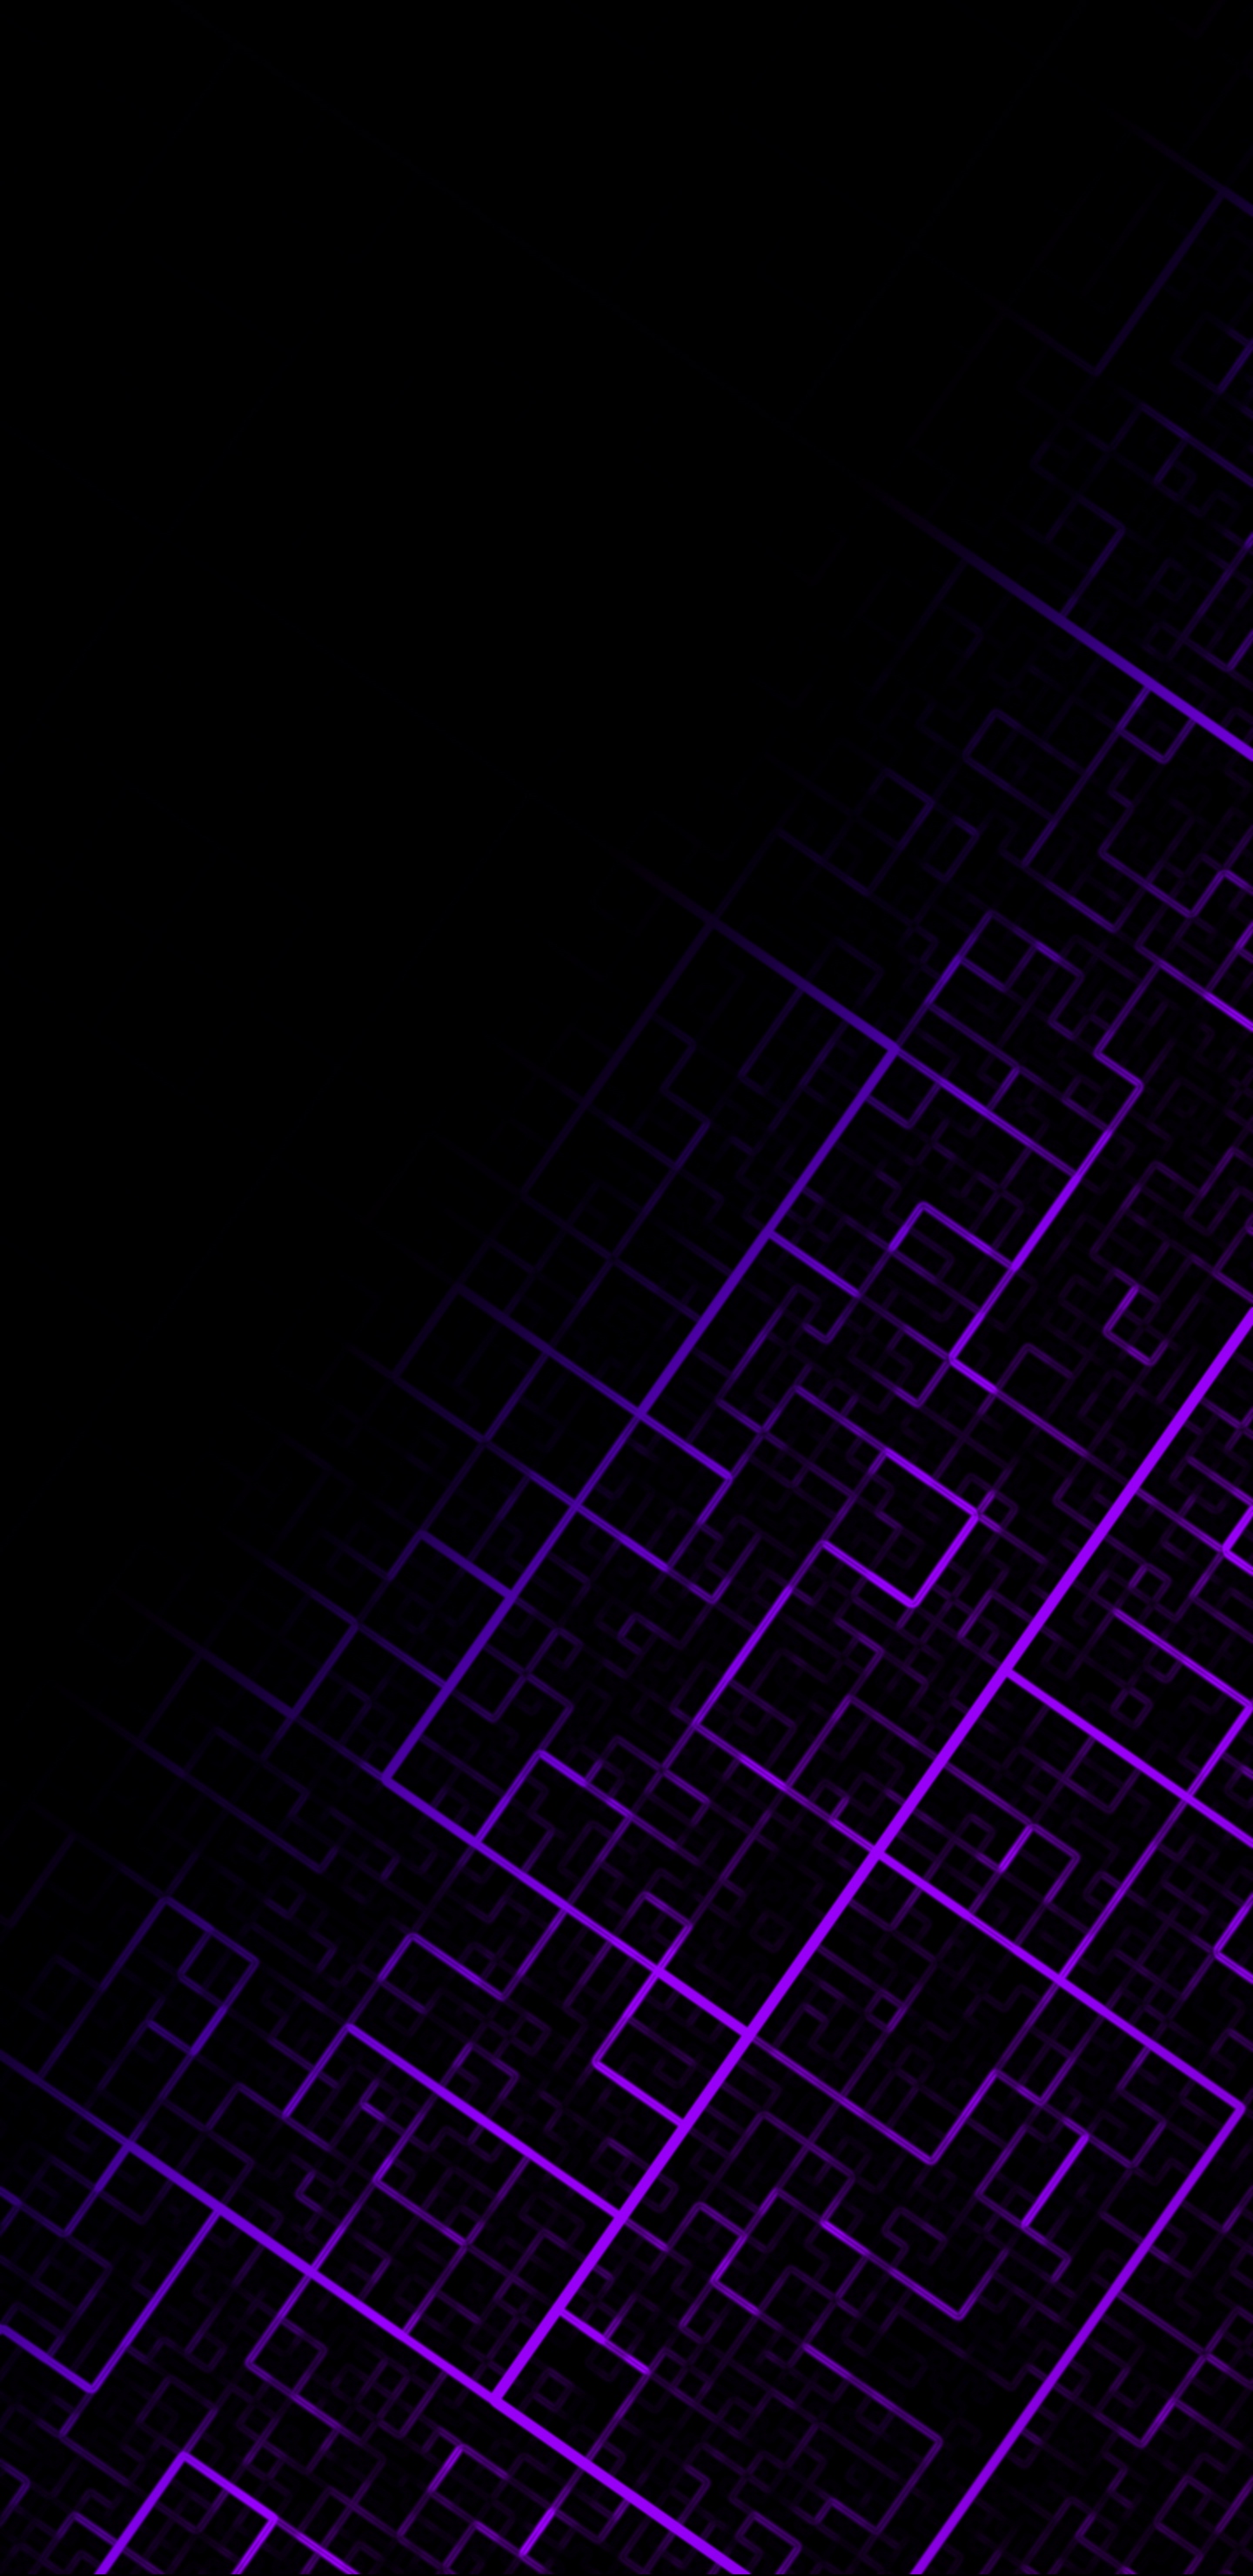 Download wallpaper 1440x2960 samsung galaxy fold butterfly purplepink black samsung galaxy s8 samsung galaxy s8 plus 1440x2960 hd background  20895